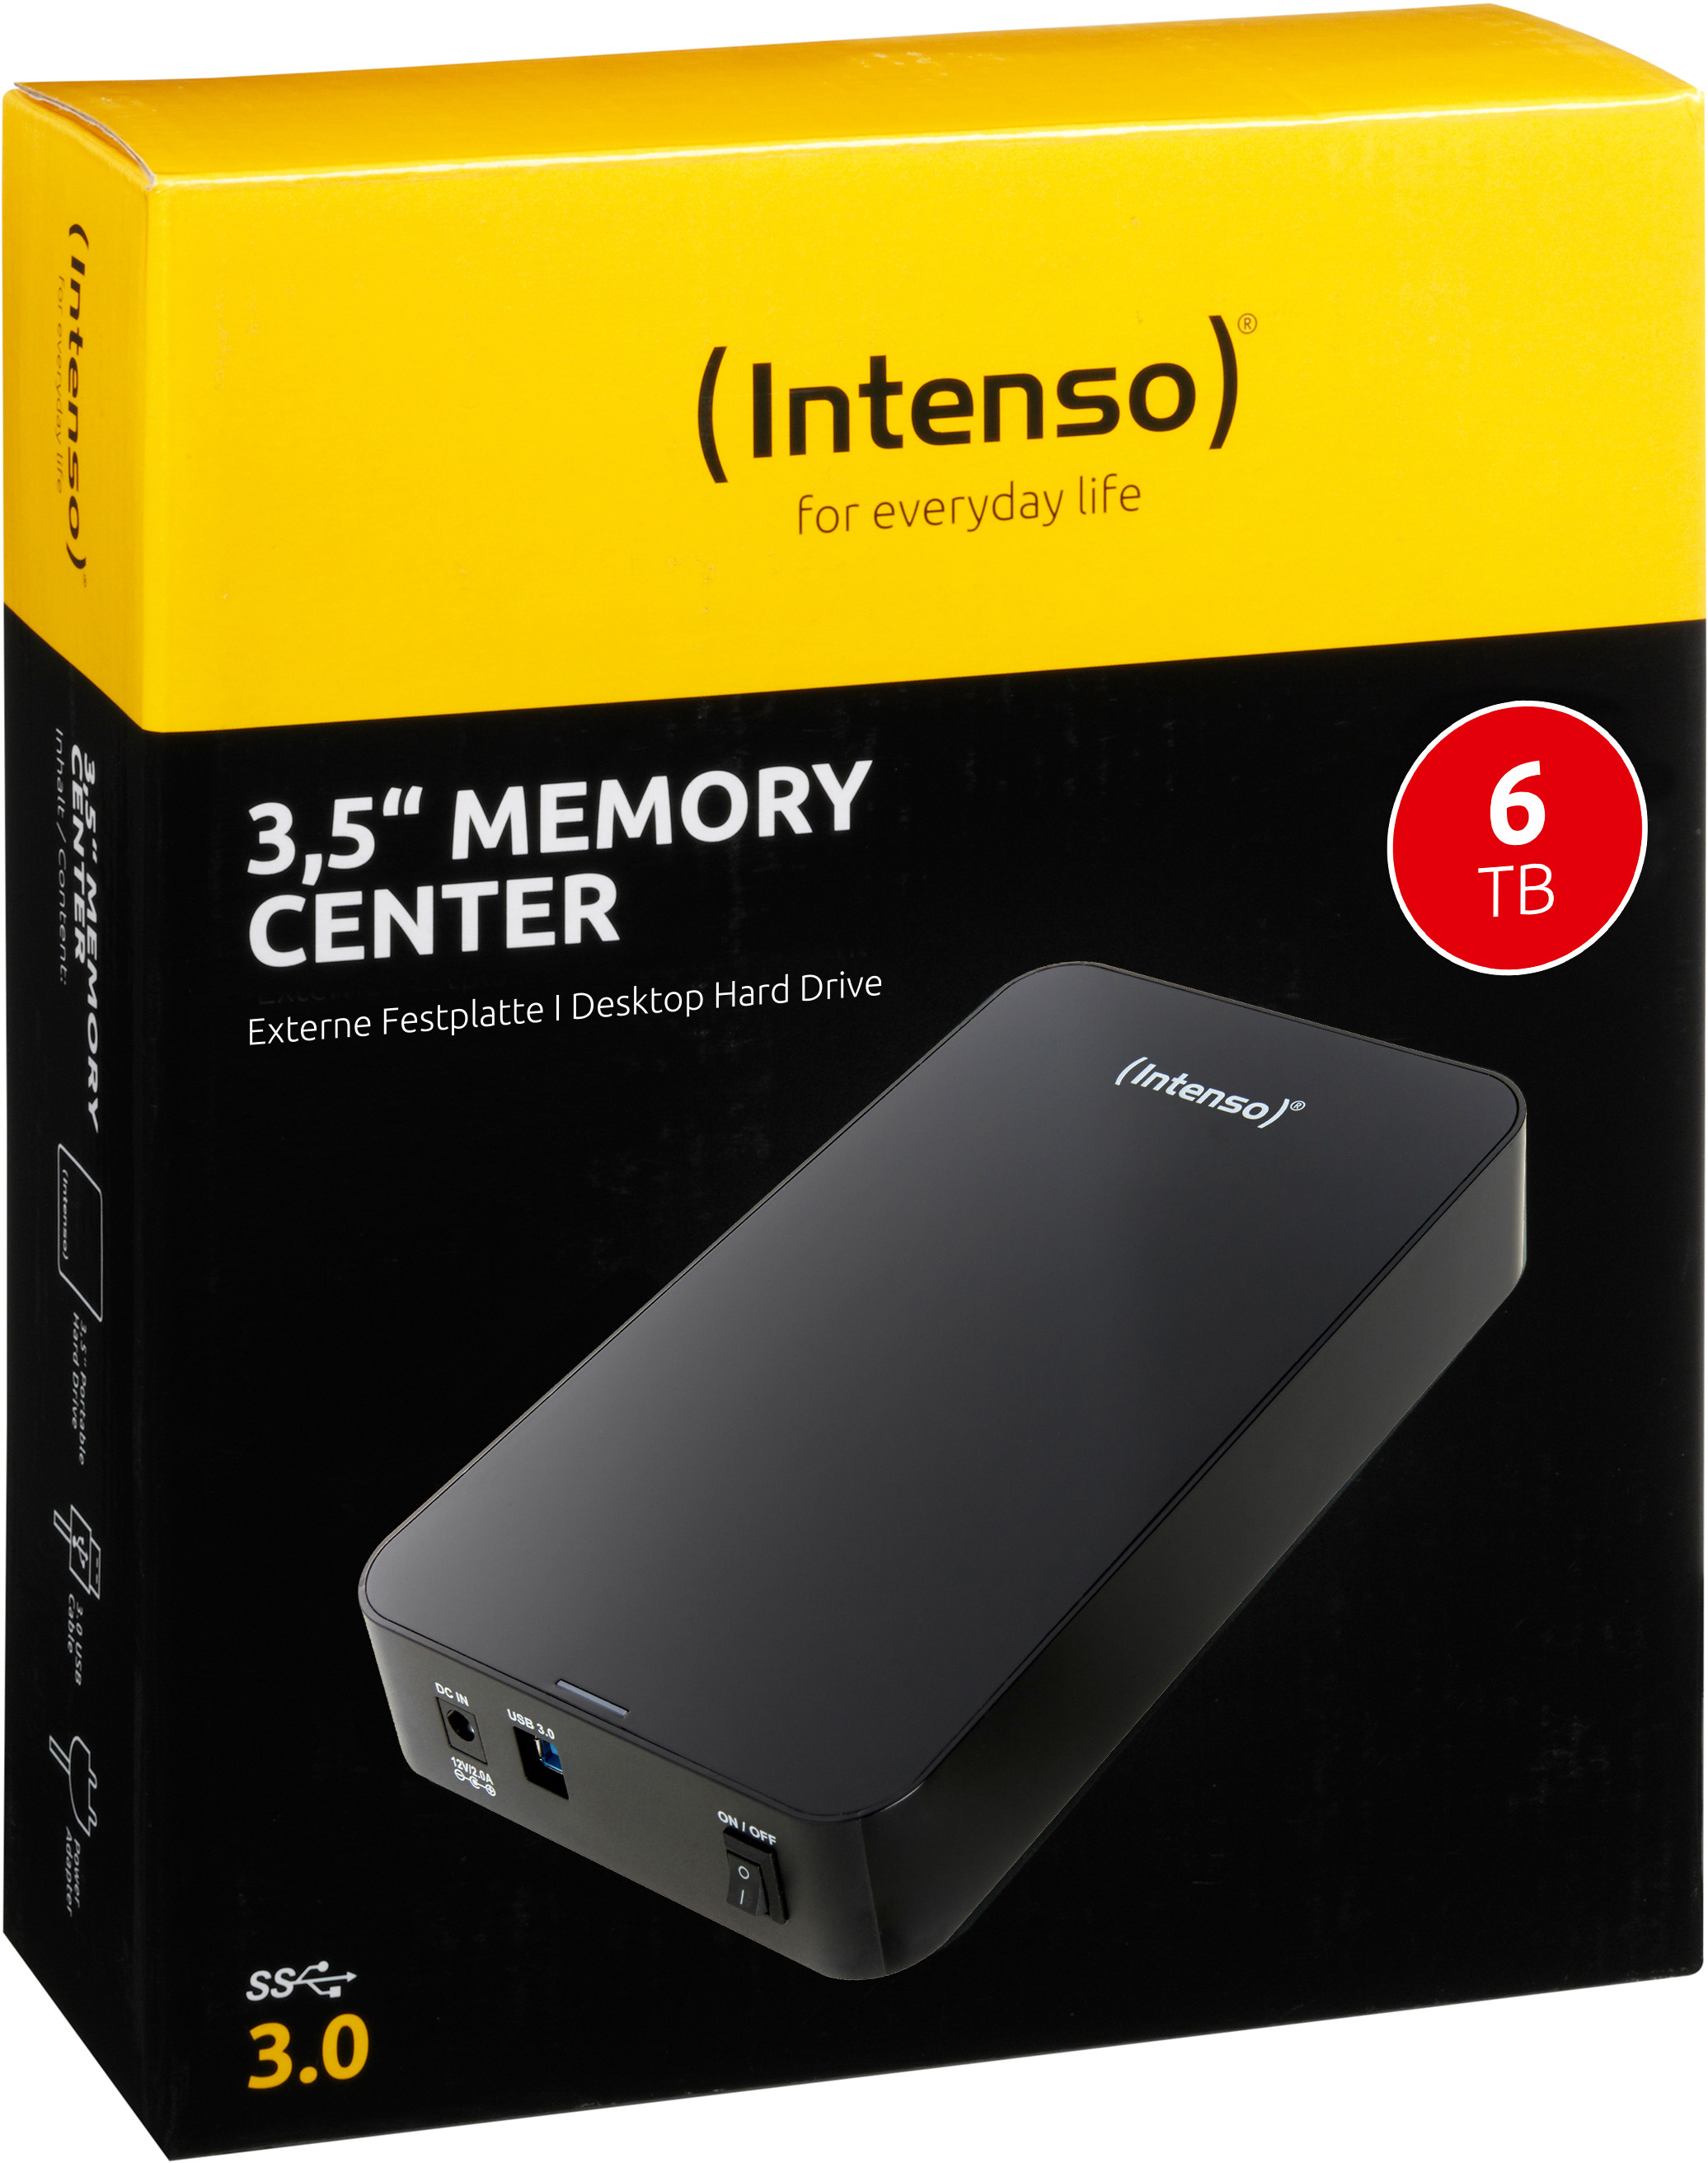 INTENSO HDD Memory Center 6TB 6031514 3.5 inch